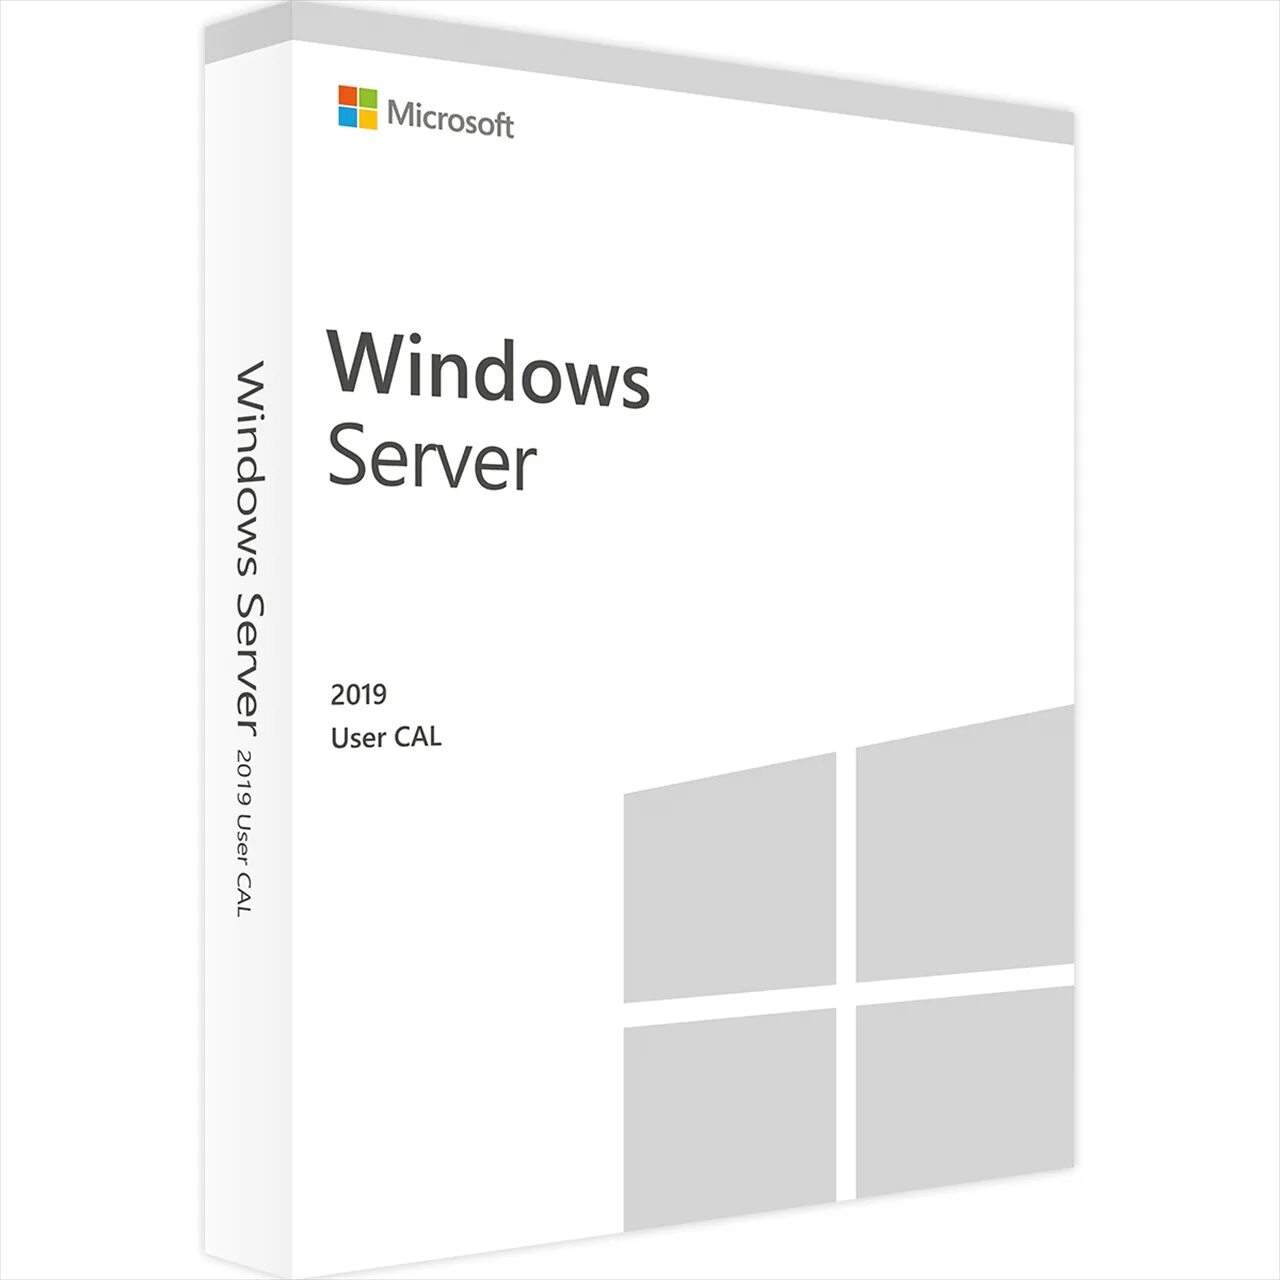 User std. Microsoft Windows Server cal 2019. Windows Server STD 2019. Windows Server 2019 user cal. Windows Server 2019 device cal.